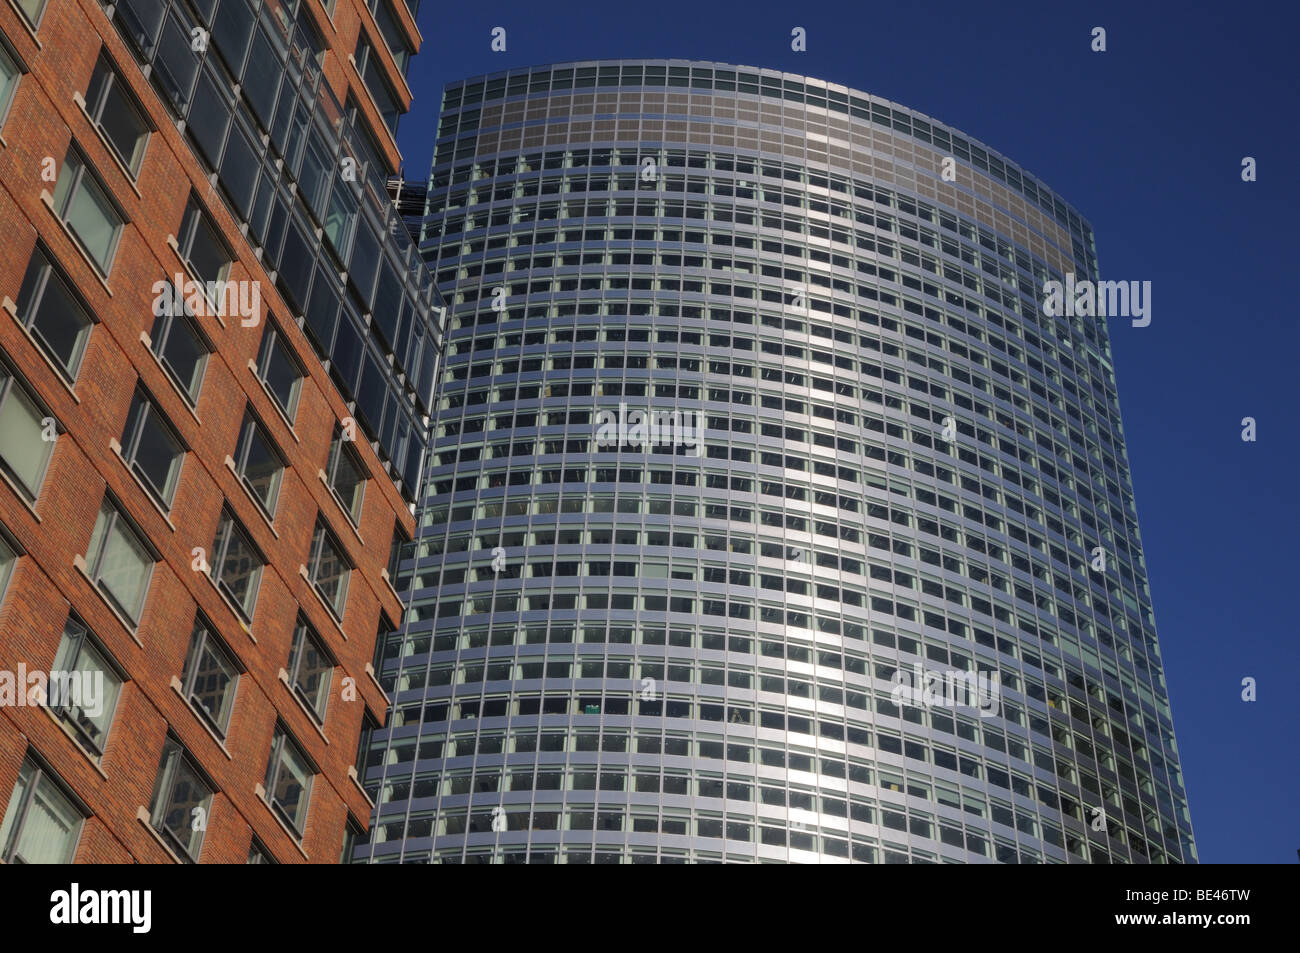 The new Goldman Sachs headquarters in Lower Manhattan. Sept. 20, 2009 Stock Photo